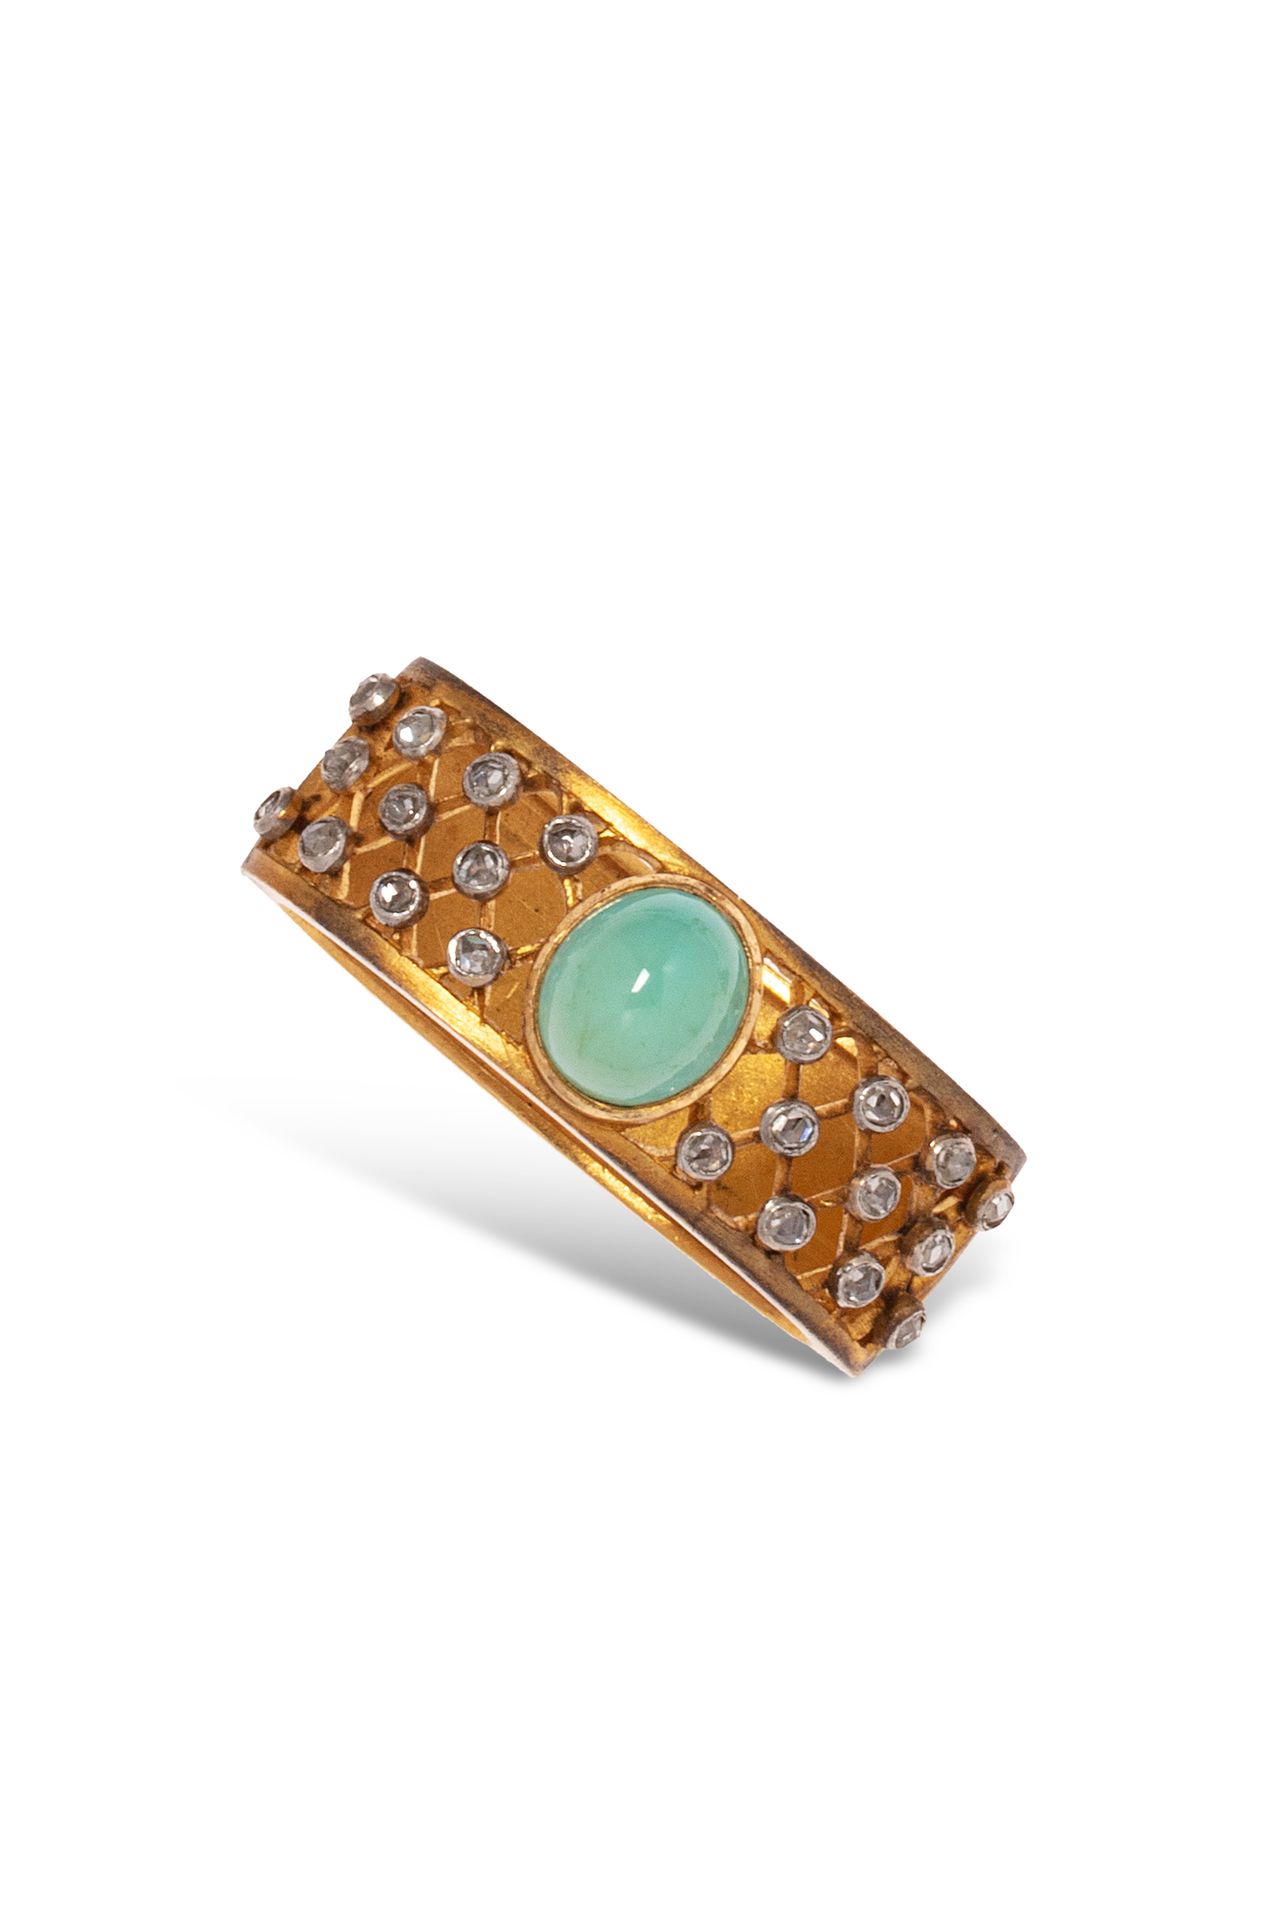 Null 18K(750)黄金拉瓦列尔胸针，正面穿有鱼网，中间是浅蓝绿色的凸圆形宝石（可能是绿松石），上面点缀着铂金镶嵌的玫瑰切割钻石。

约1900年。

大&hellip;